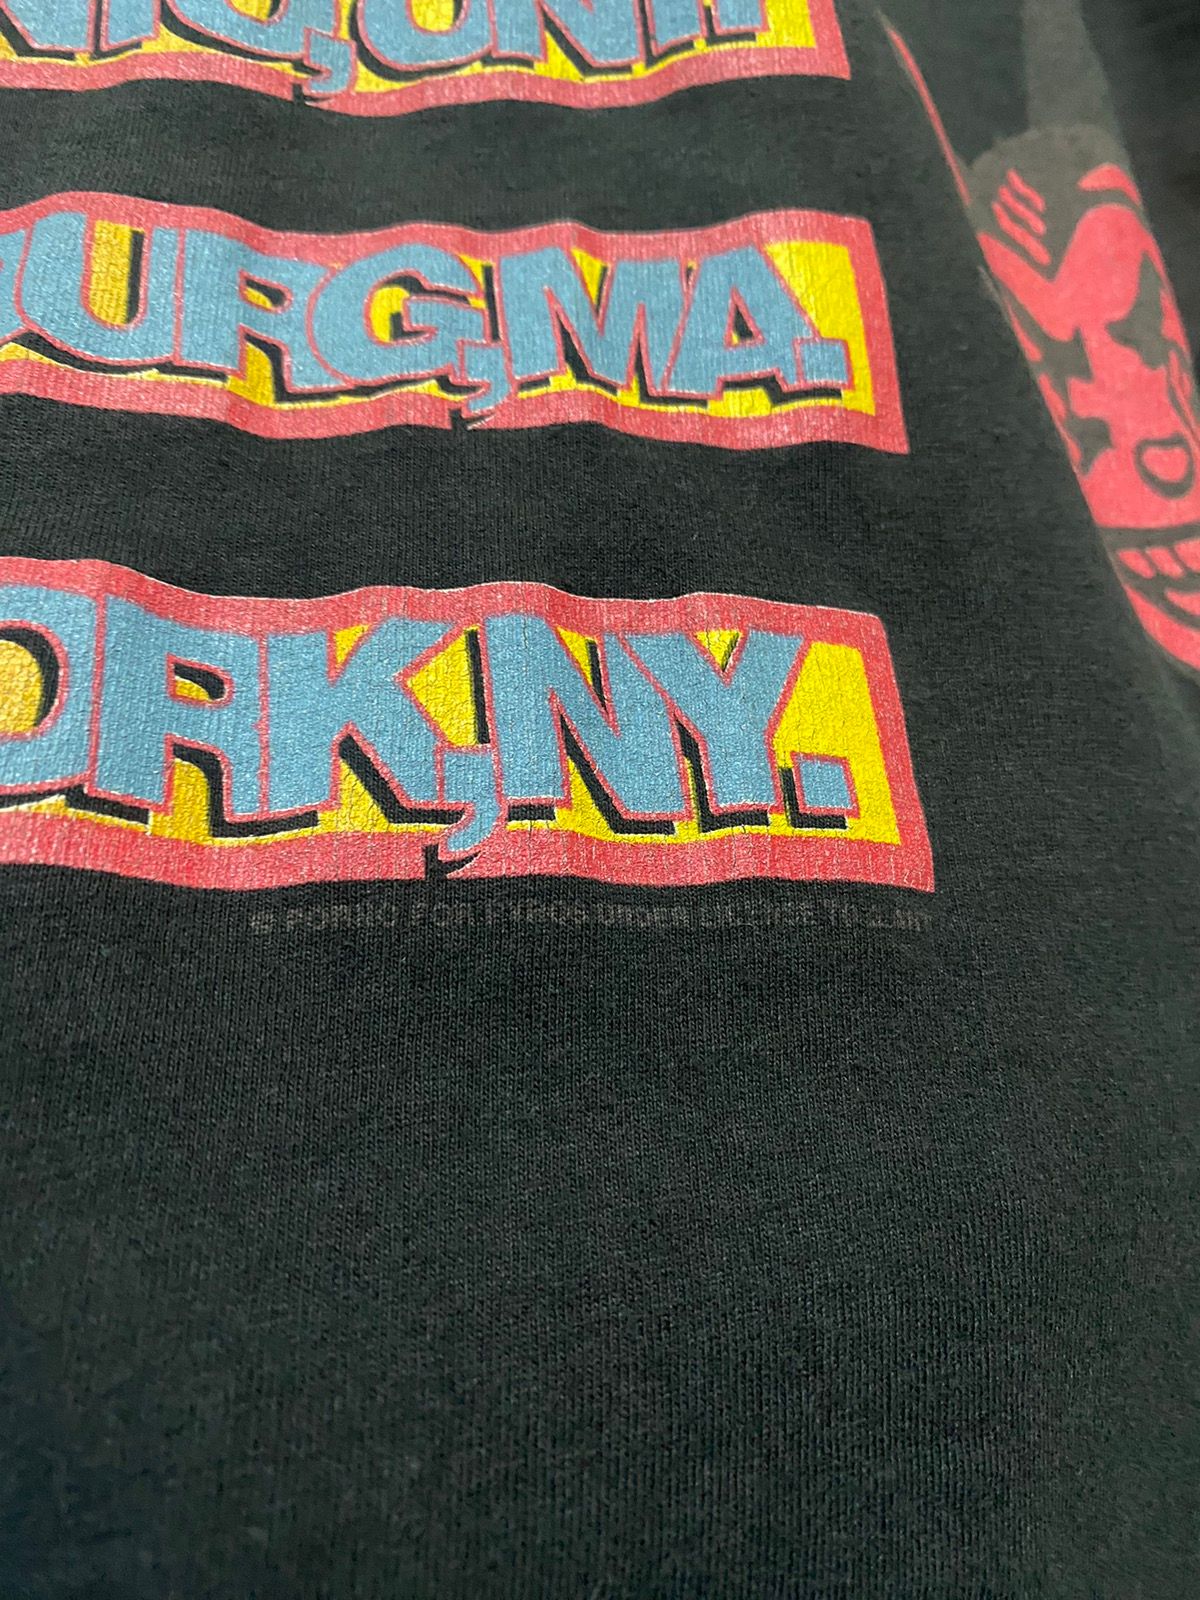 Vintage 90s Porno for Pyros US Tour Graphic T-Shirt Rare L - 10